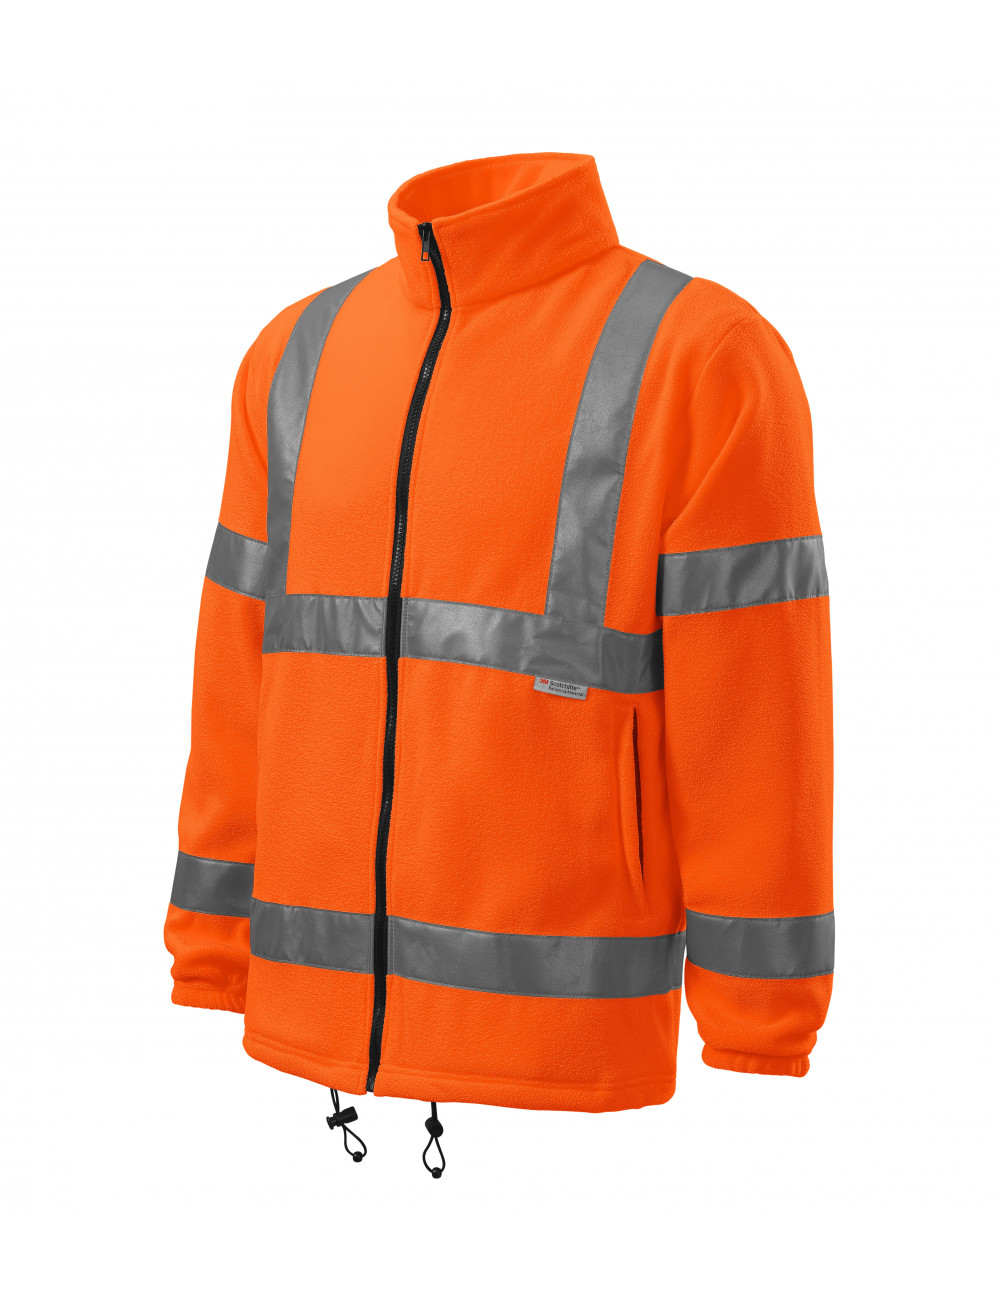 Polar unisex hv fleece jacket 5v1 reflective orange Adler Rimeck